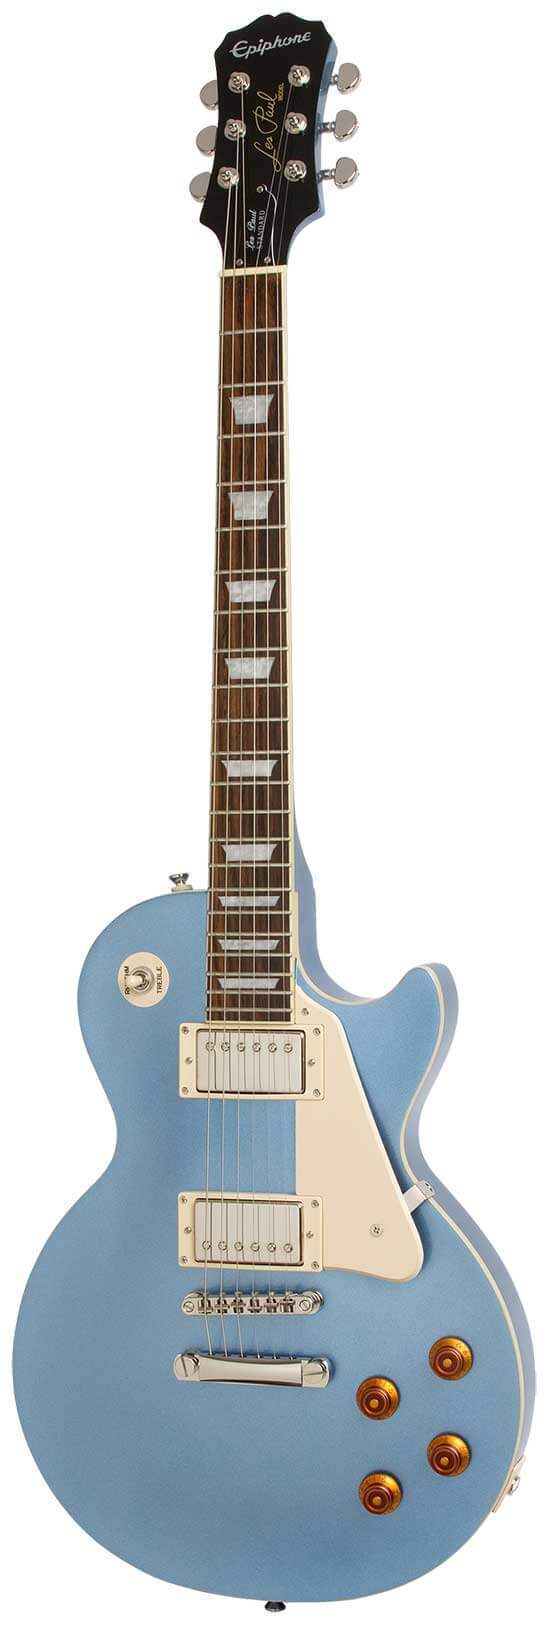 Epiphone Lespaul Standard Pelham Blue electric guitar